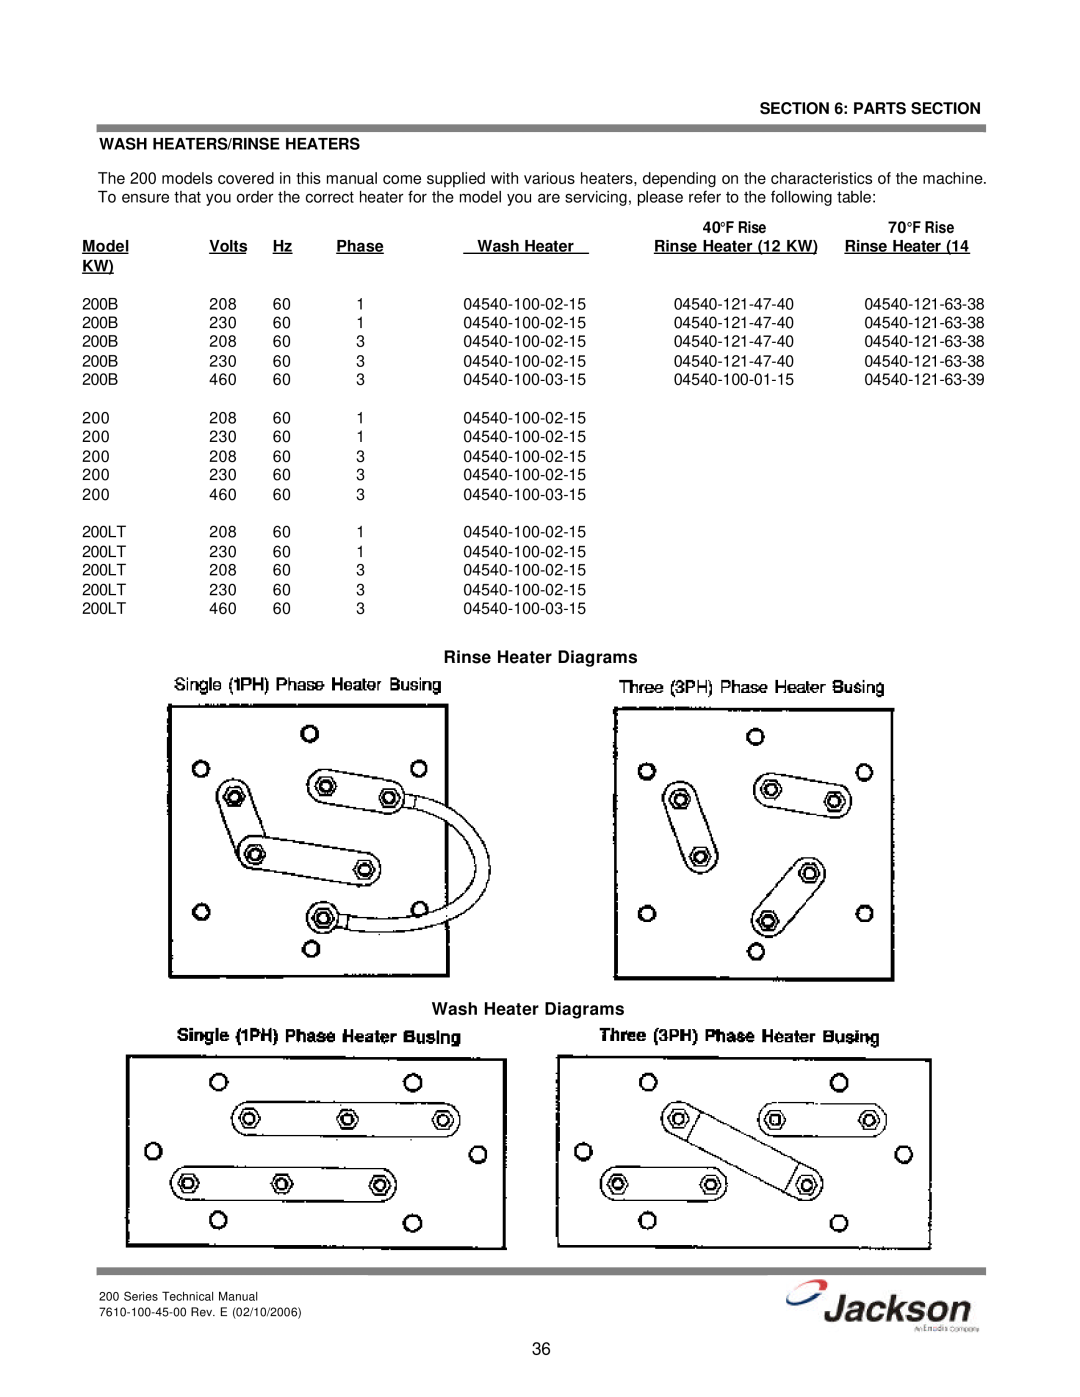 Jackson 200 Rinse Heater Diagrams Wash Heater Diagrams, Parts Section Wash Heaters/Rinse Heaters, 70F Rise, Model, Volts 